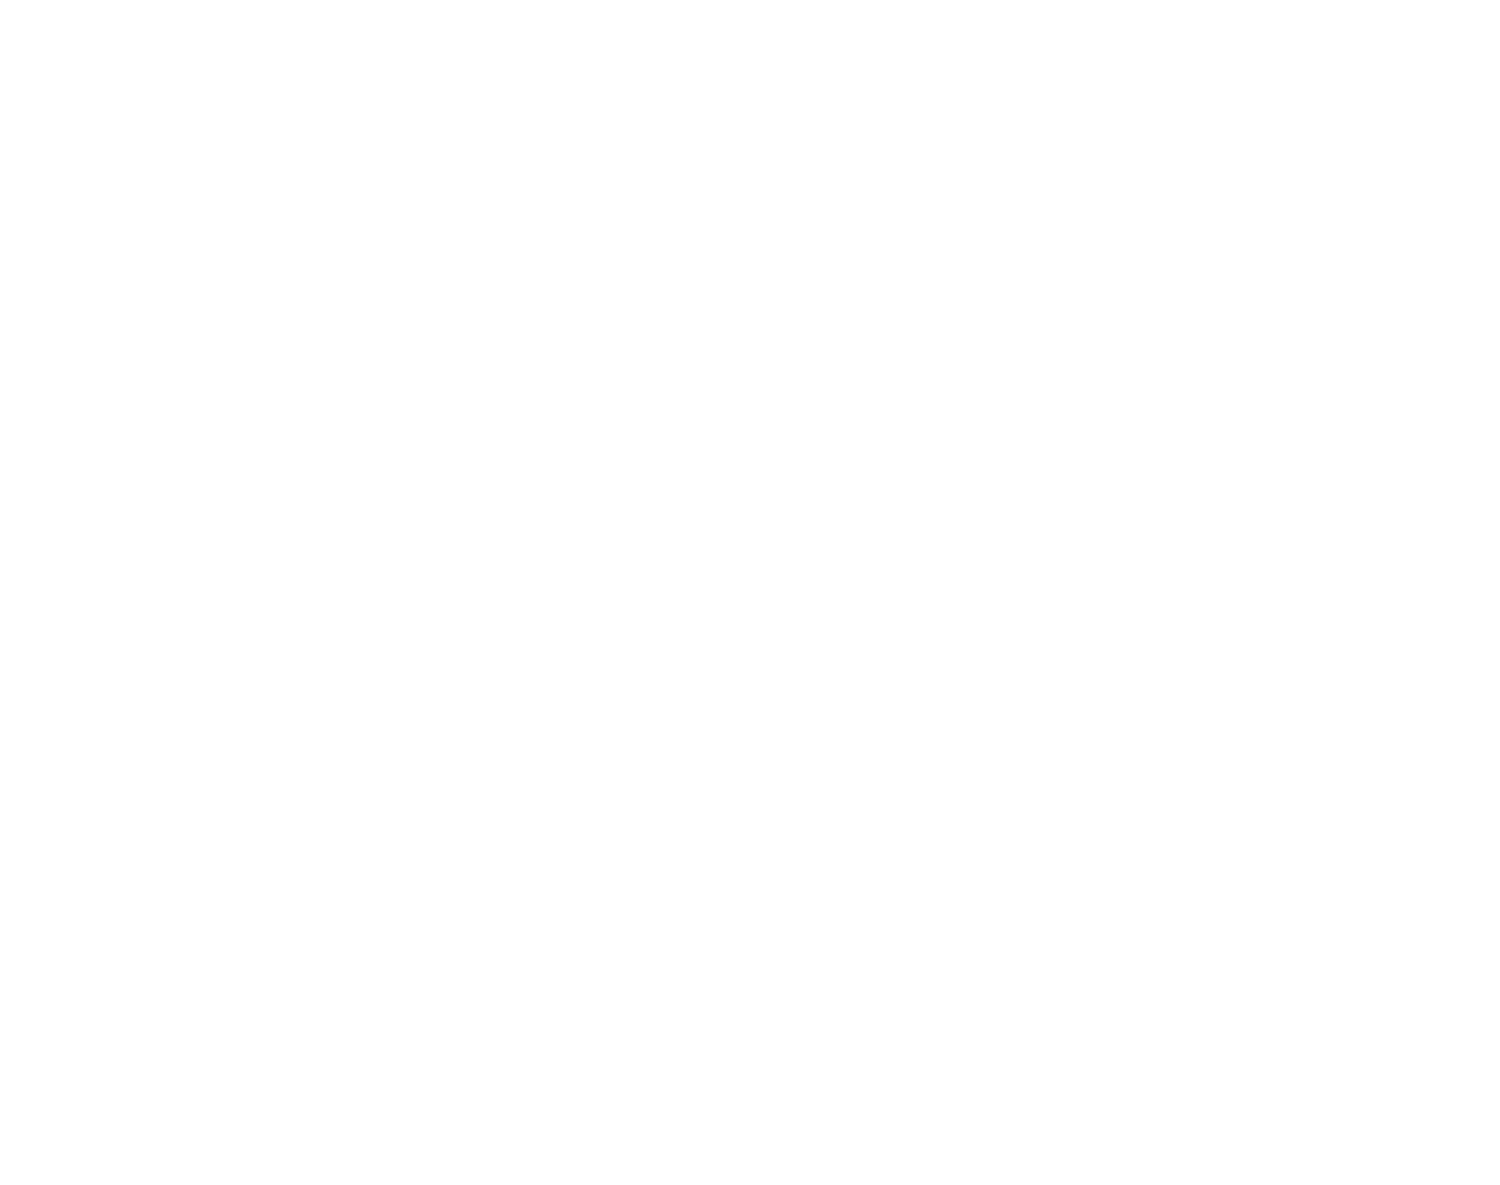 Vince Igor - Elevating table design